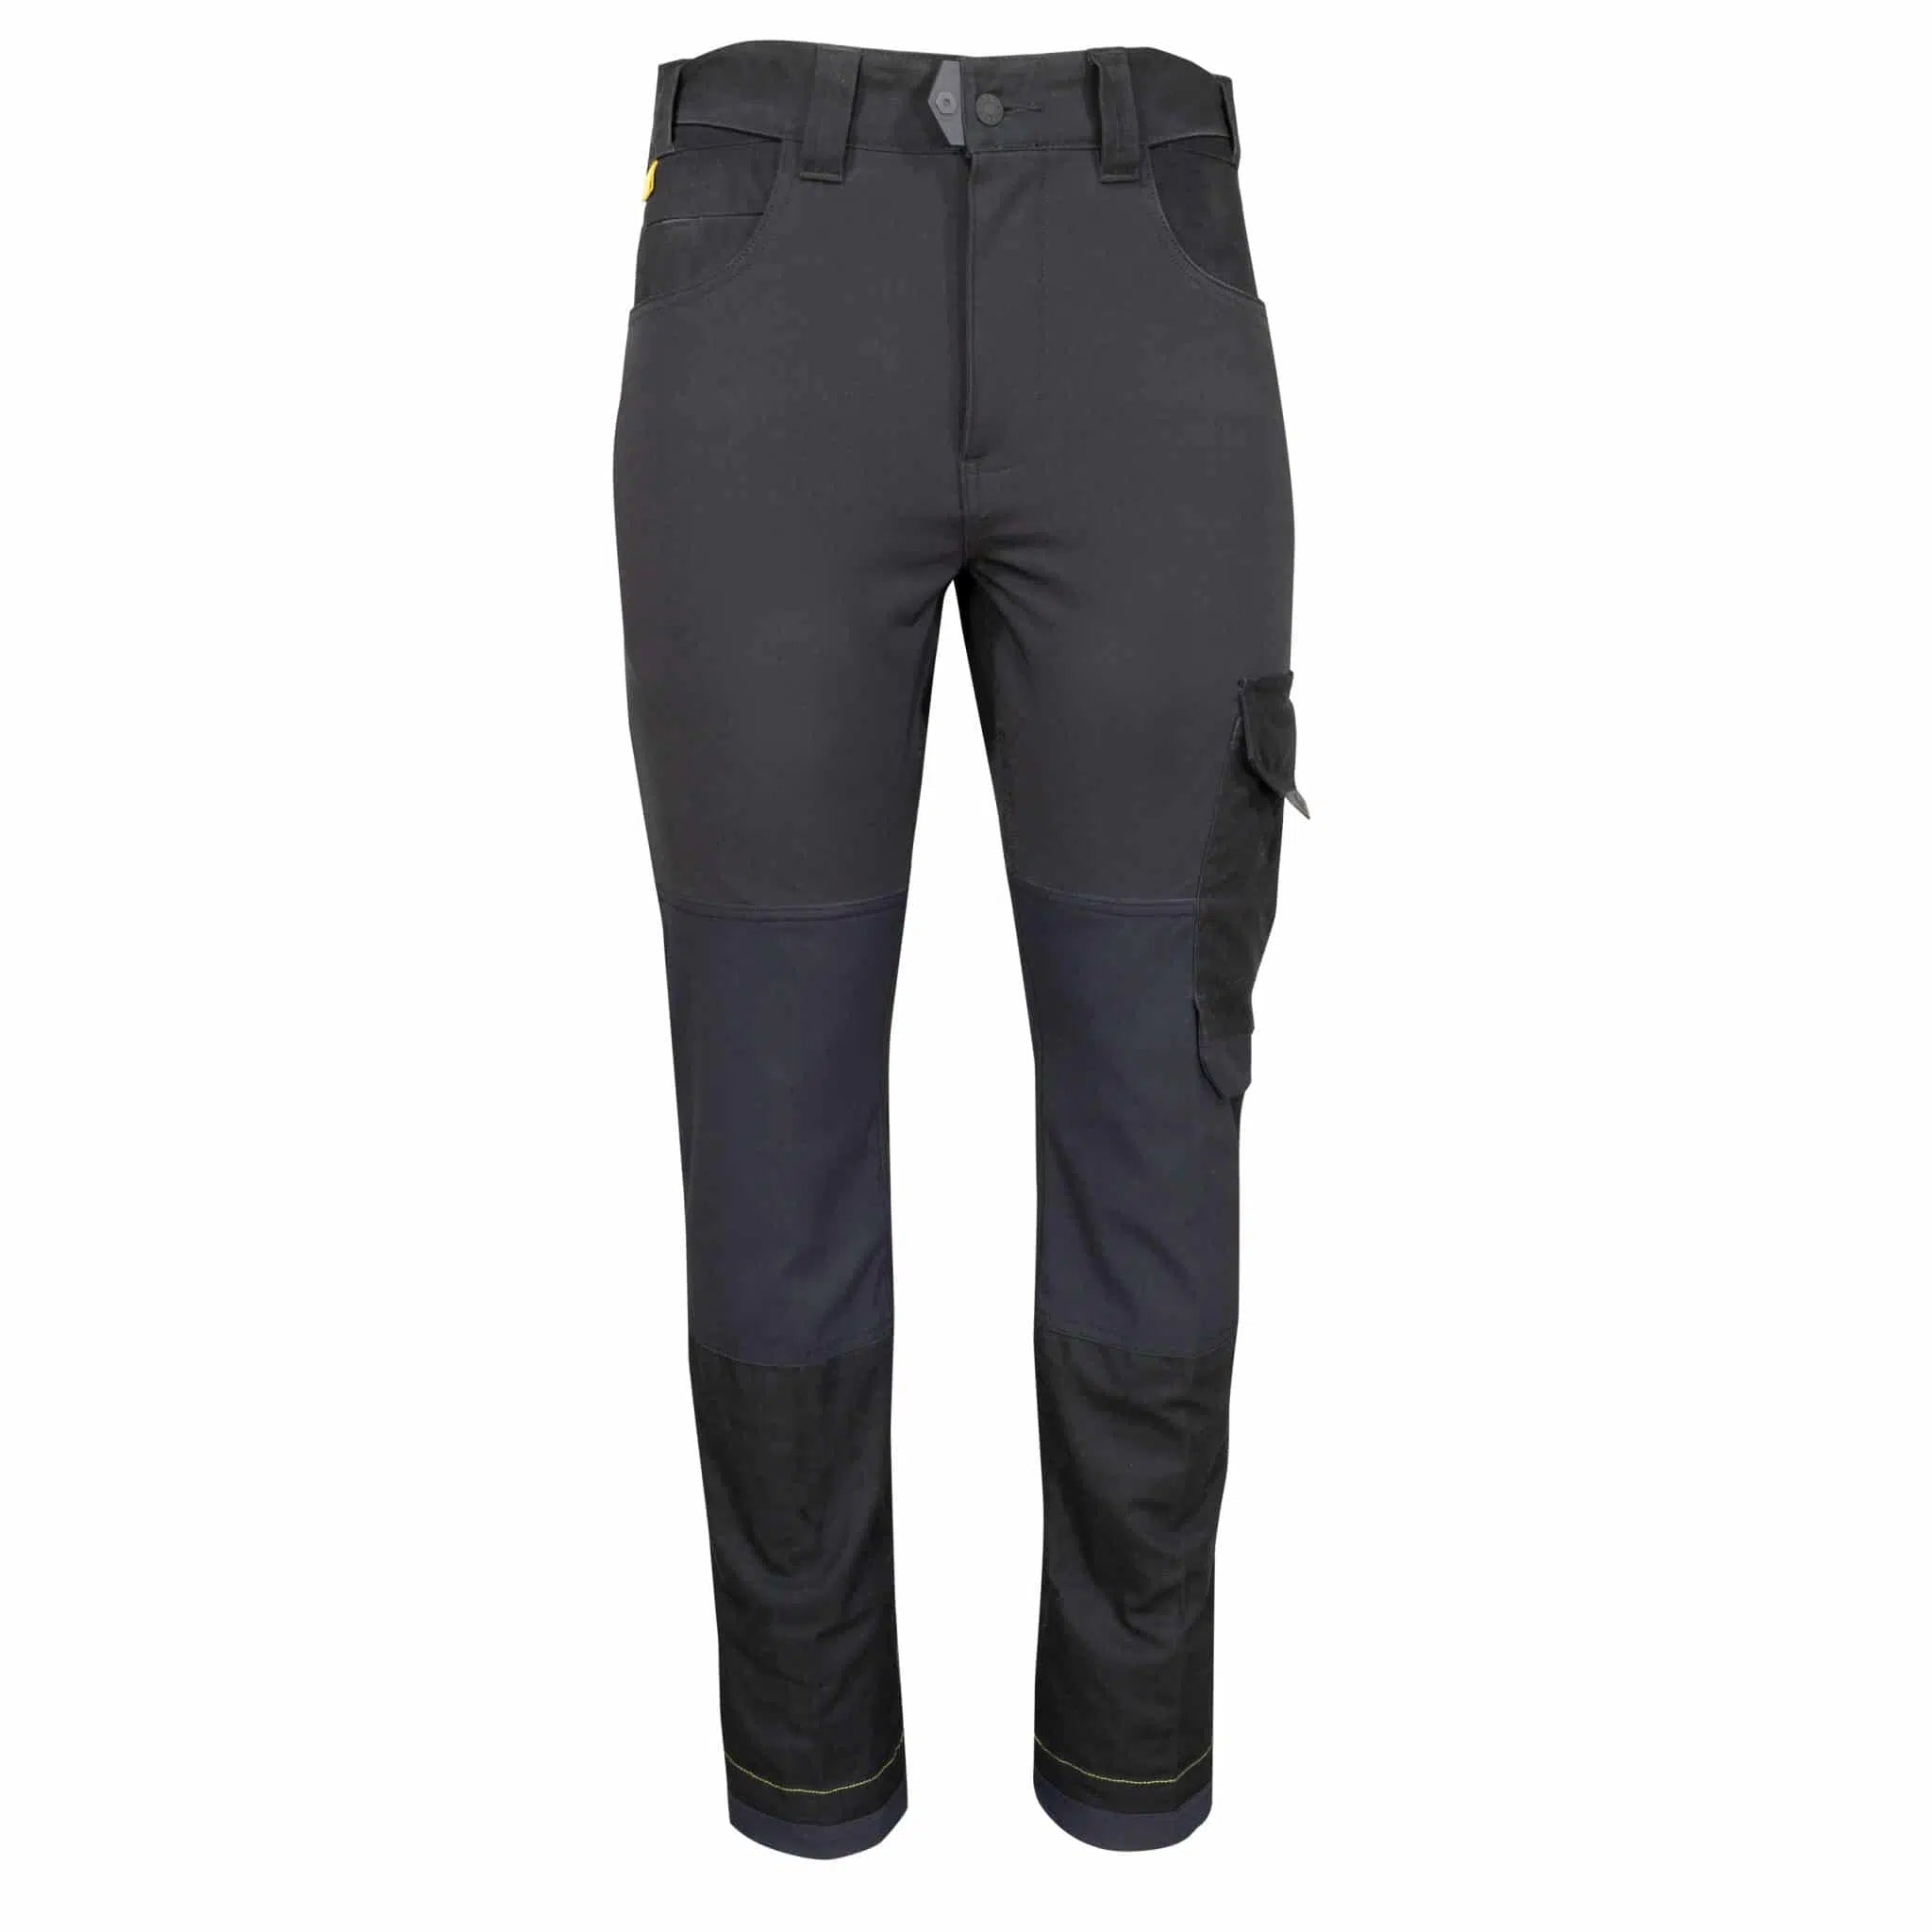 Jackfield - Work pants, navy blue, 32/32. Colour: blue. Size: 32/32